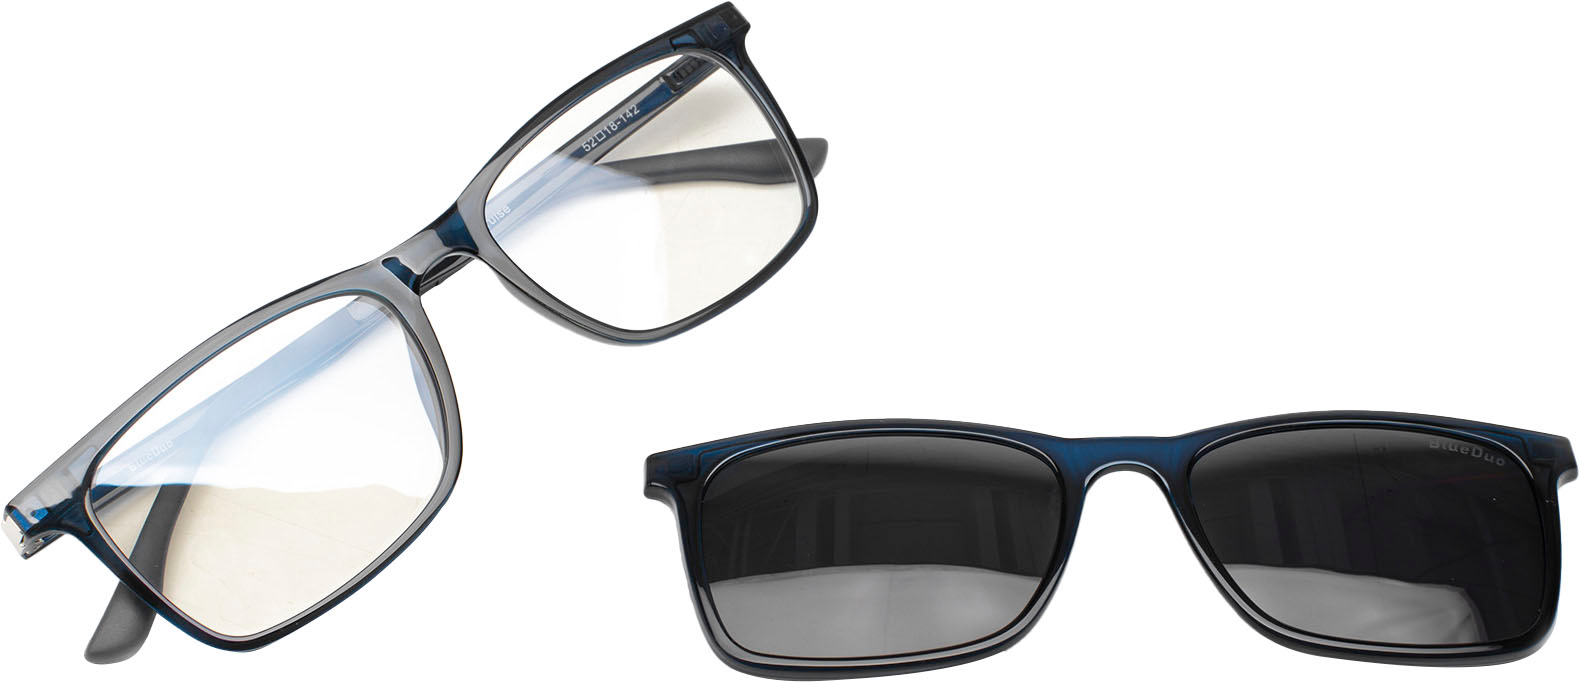 Men's Blue Light Glasses - Midway - Clear